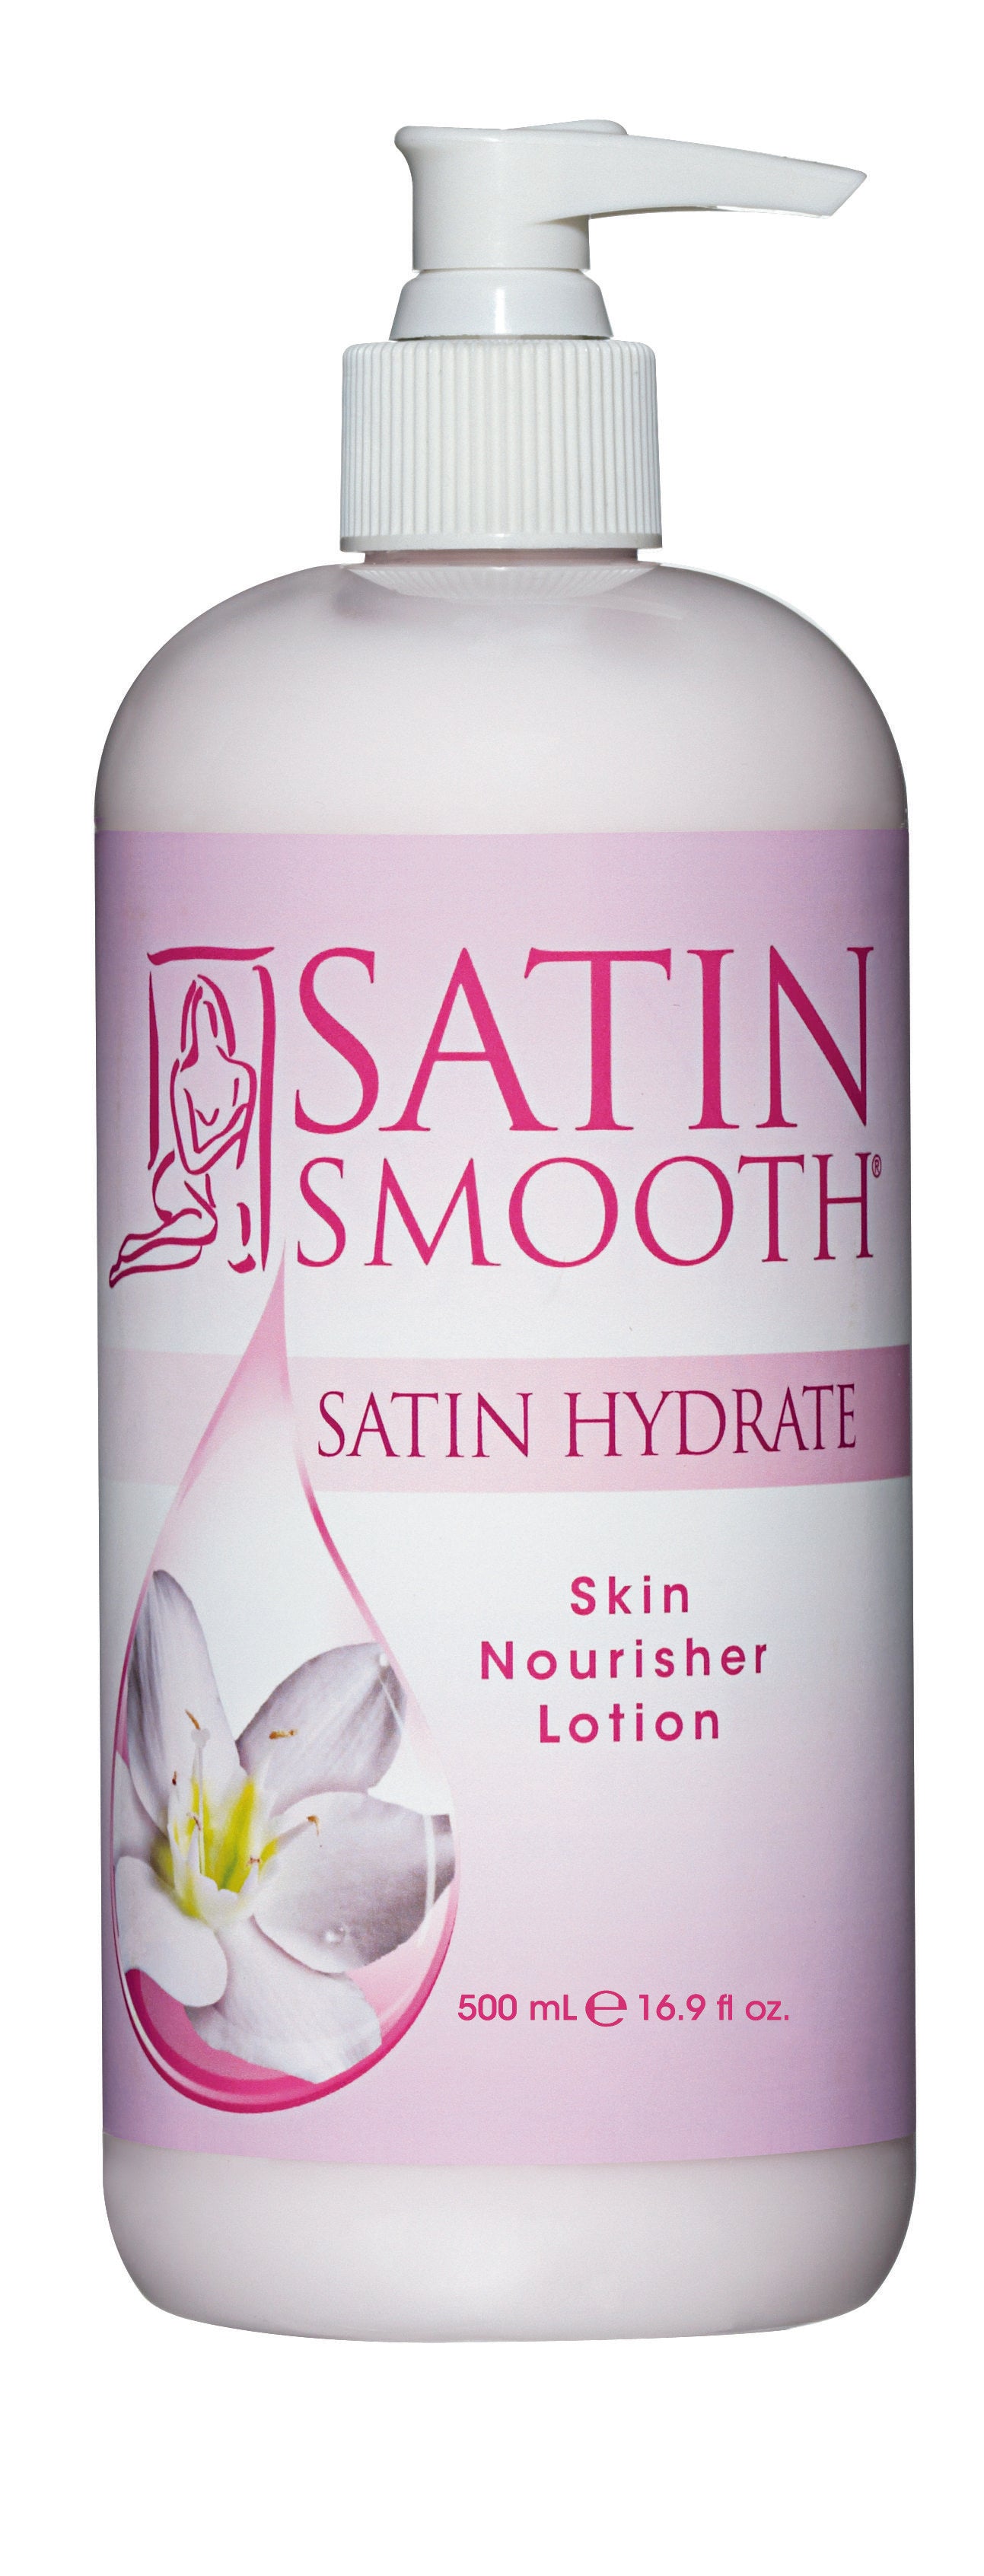 Satin Hydrate Skin Nourisher